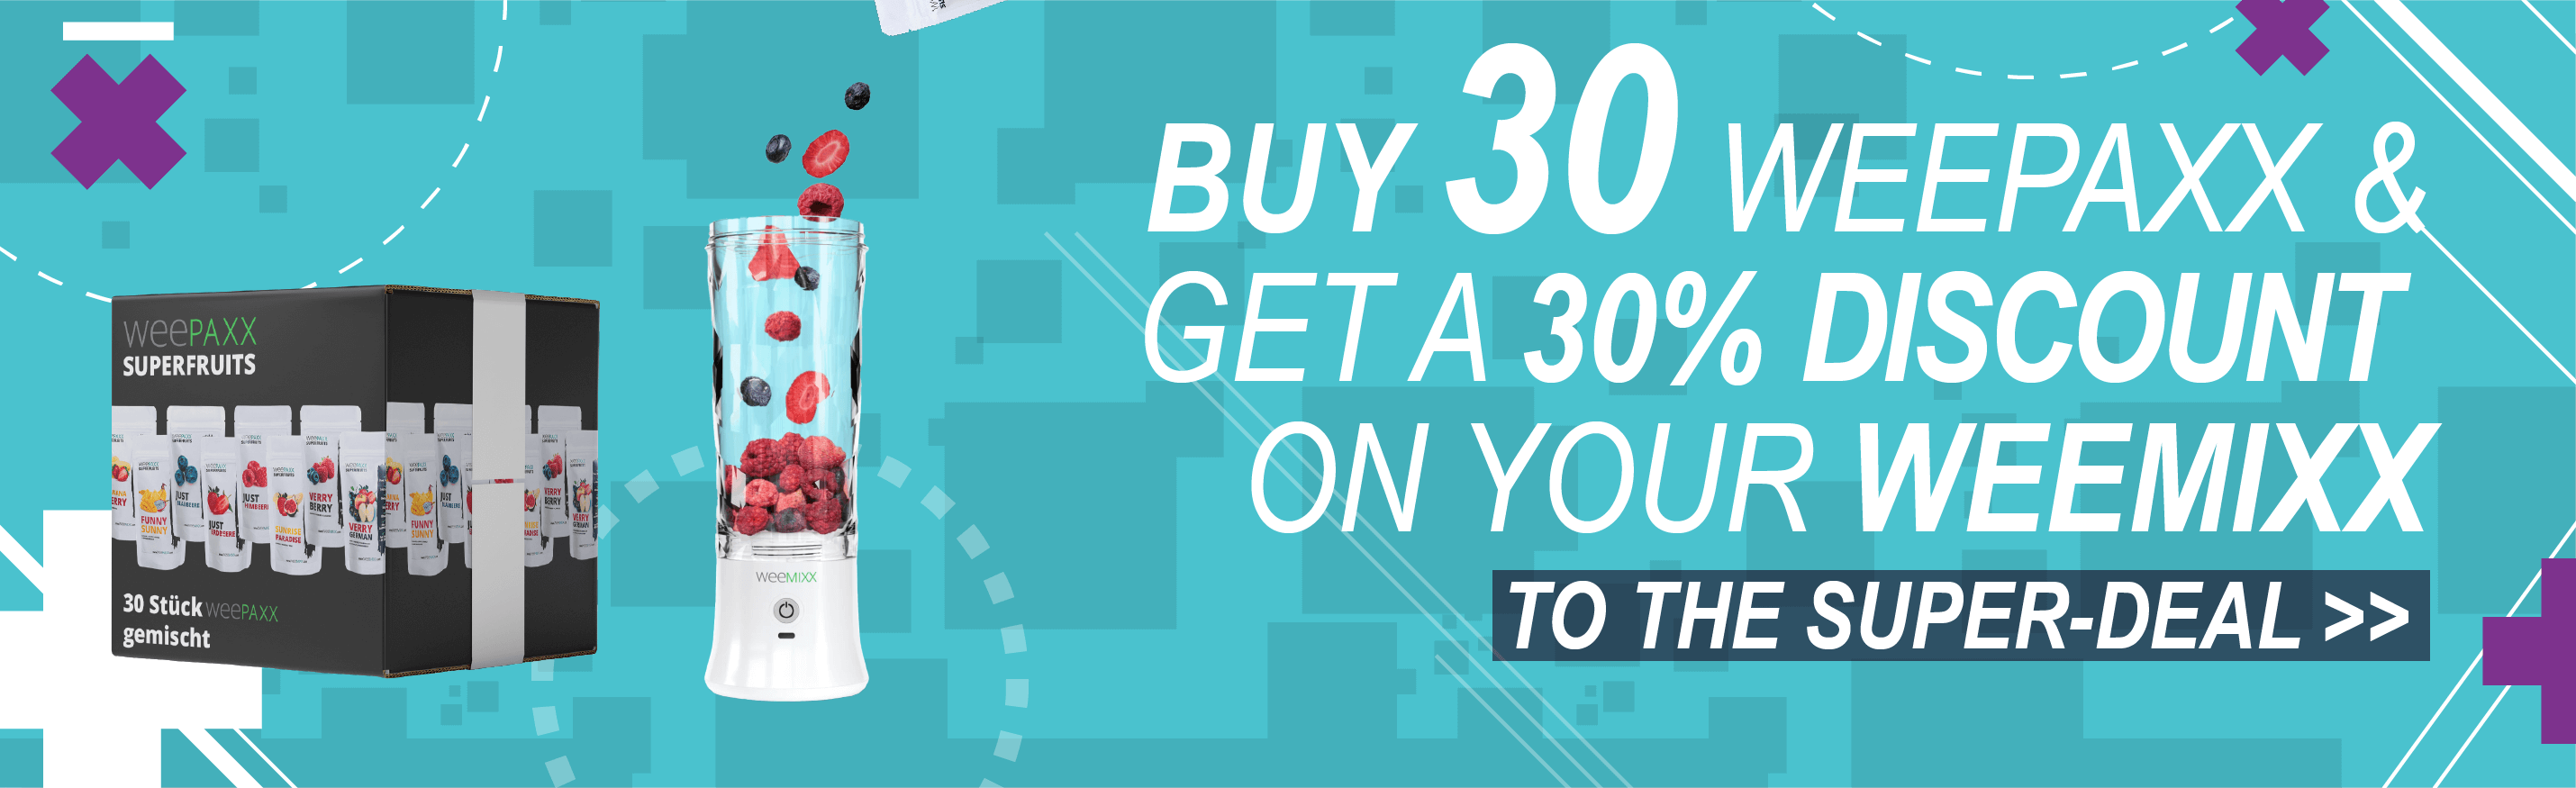 Save 30% on your weemixx